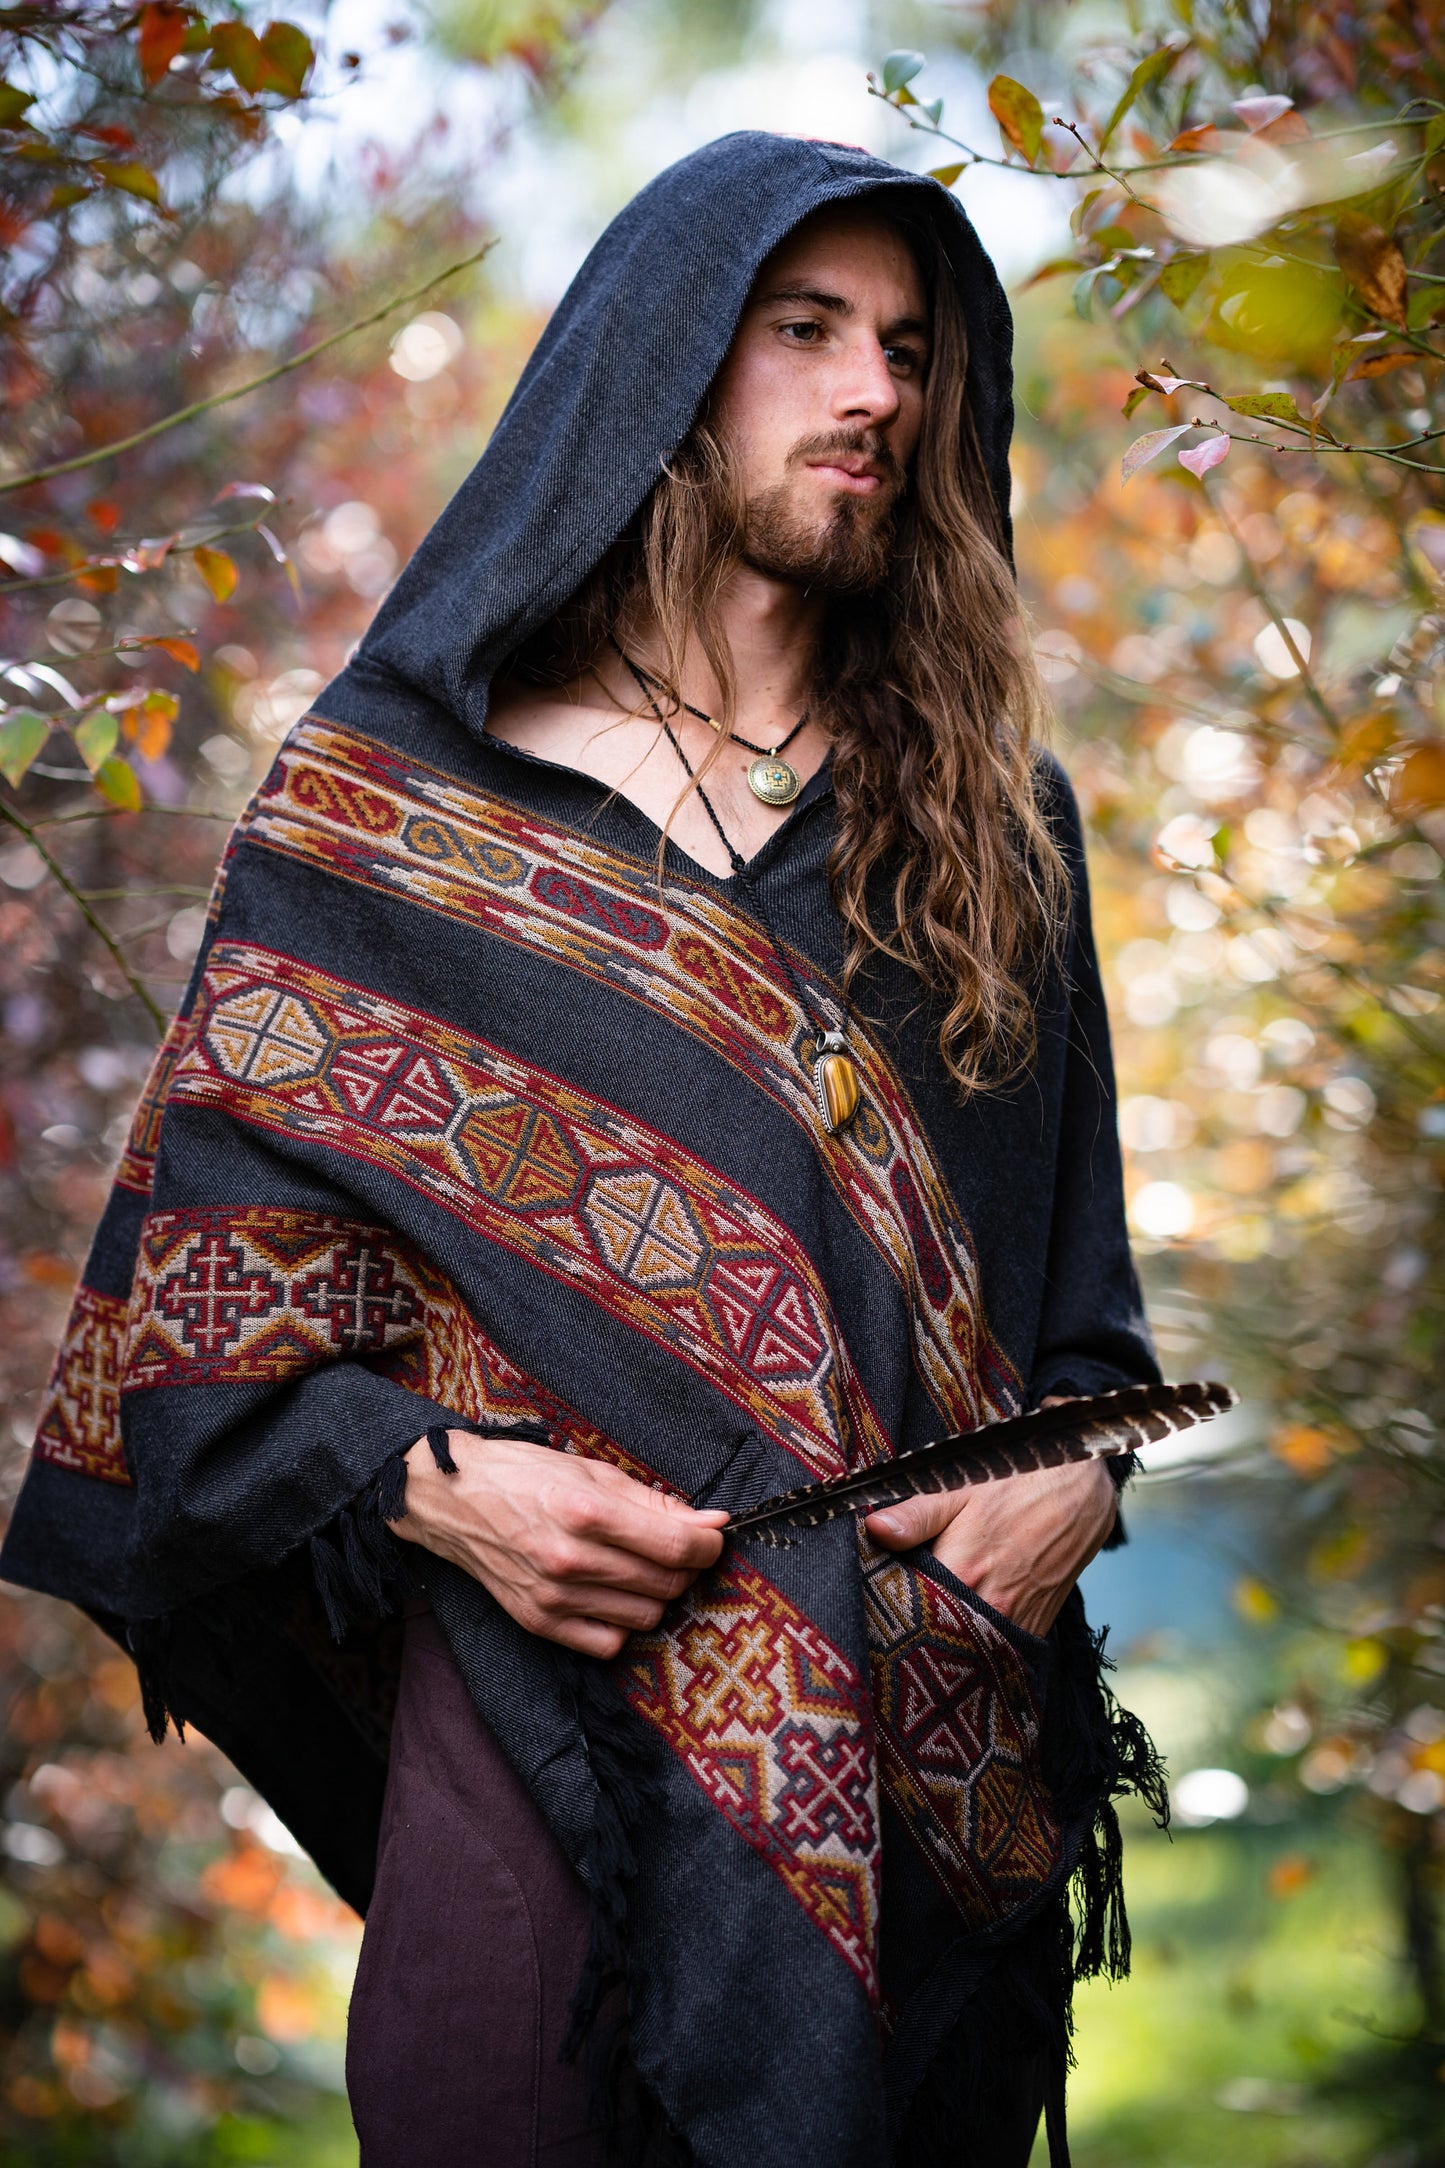 Men's Hooded Yak Wool Poncho Dark Grey Pockets Tribal Embroidery Celtic Gypsy Alternative Festival Rave Mexican Primitive Large Hood AJJAYA